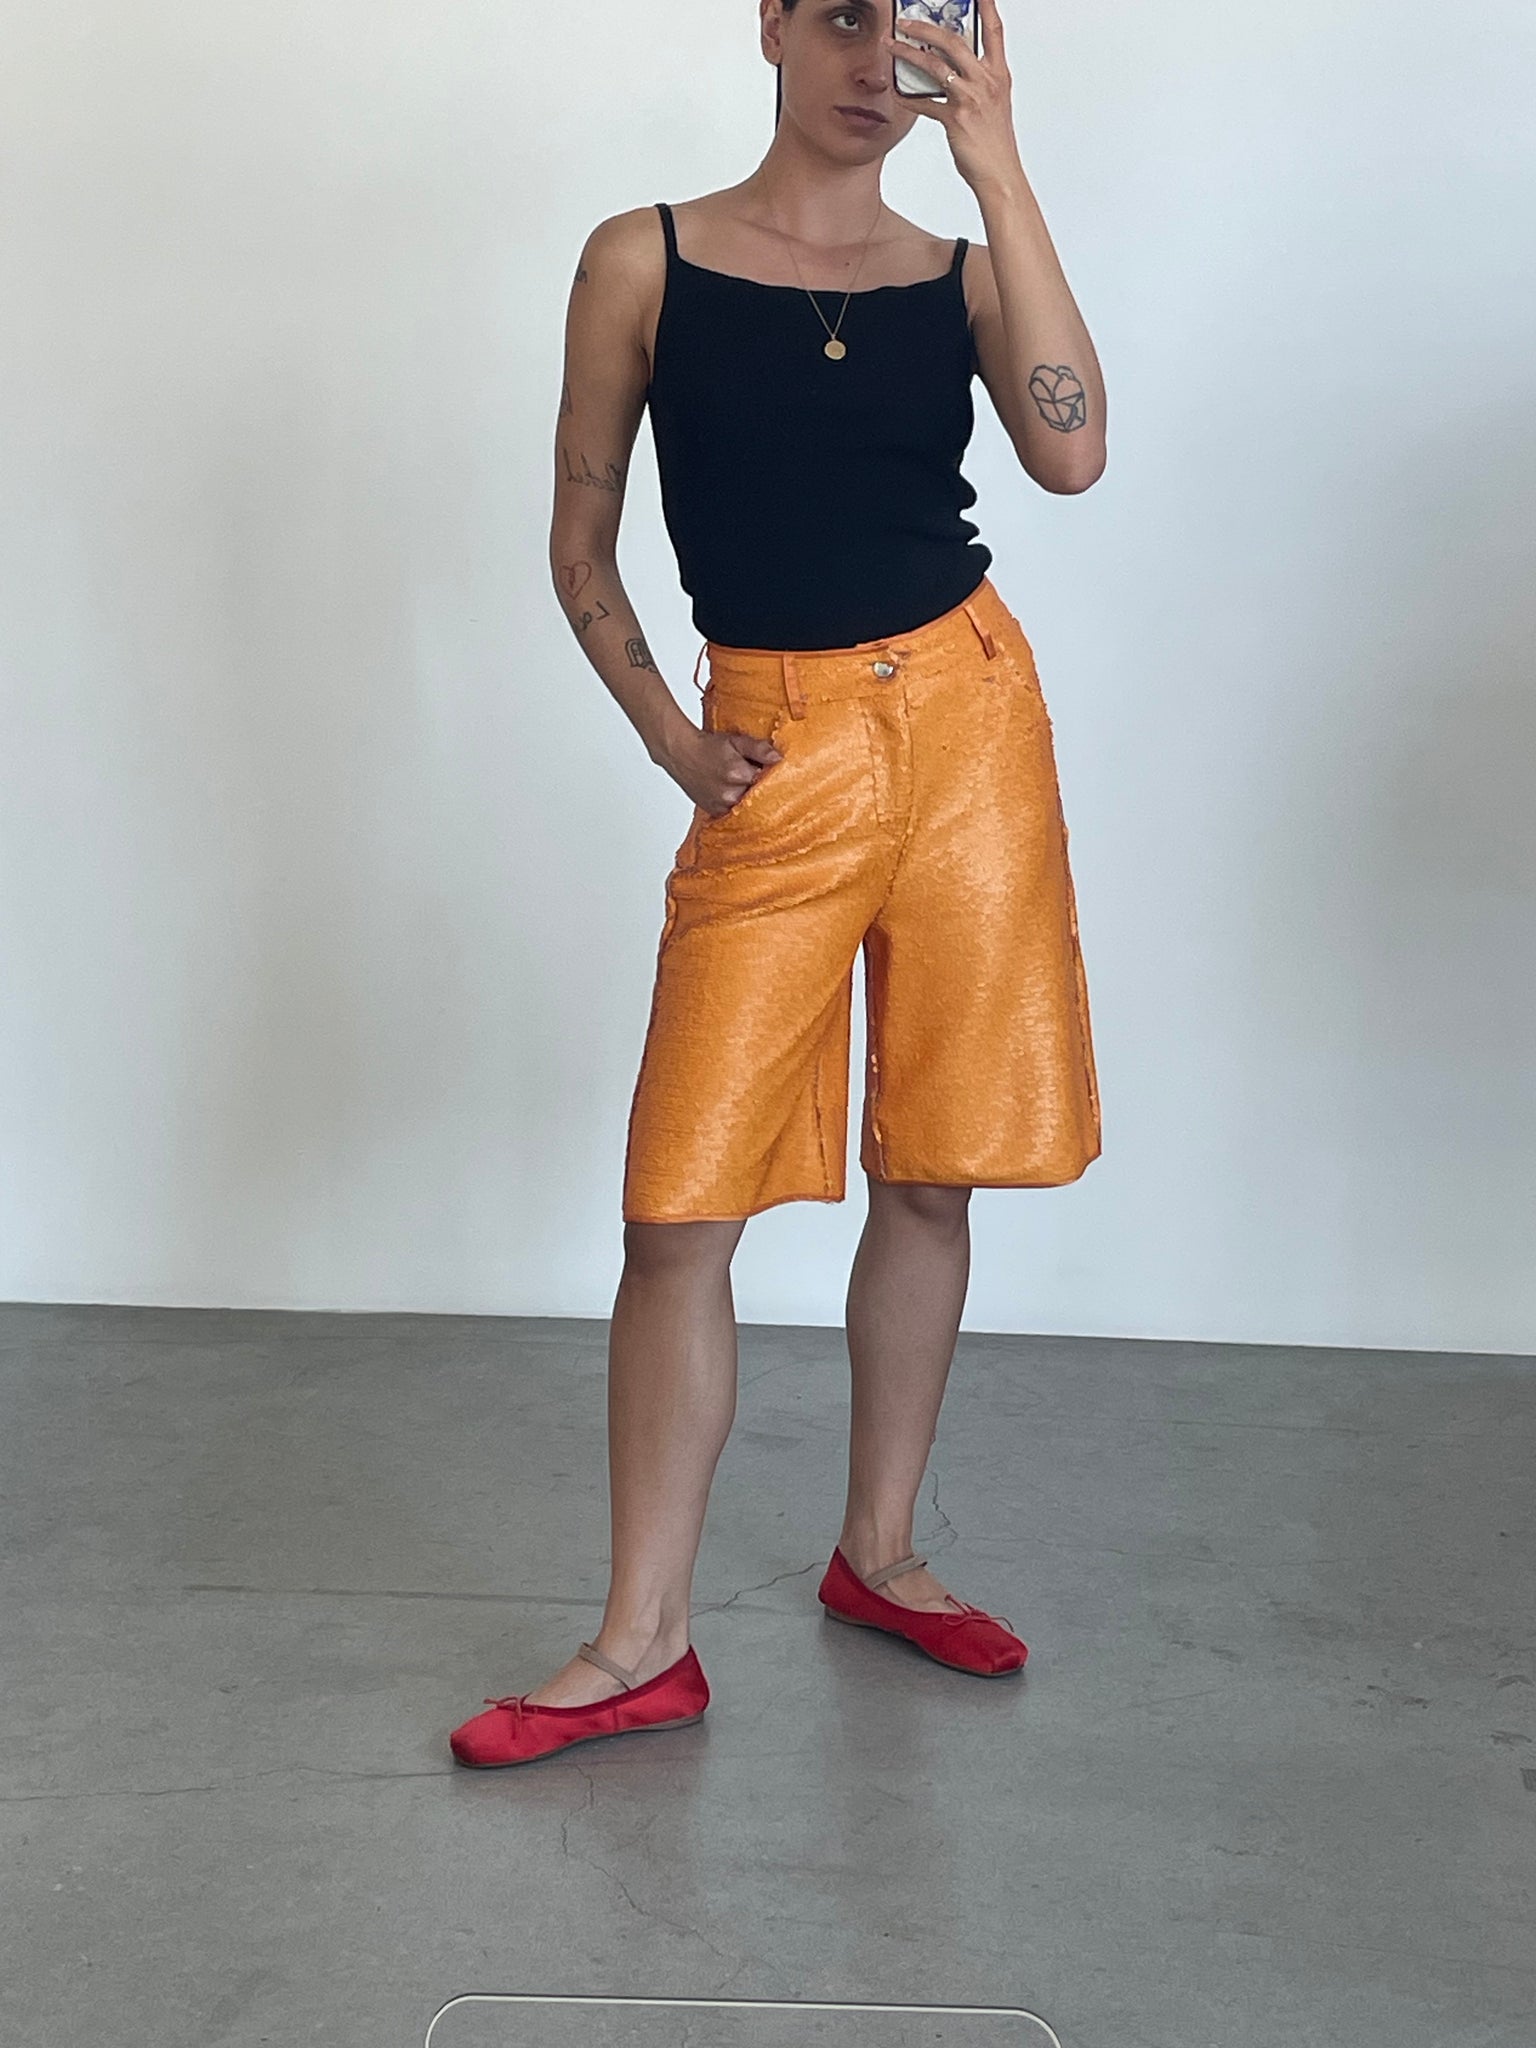 SM matte sequin orange long short